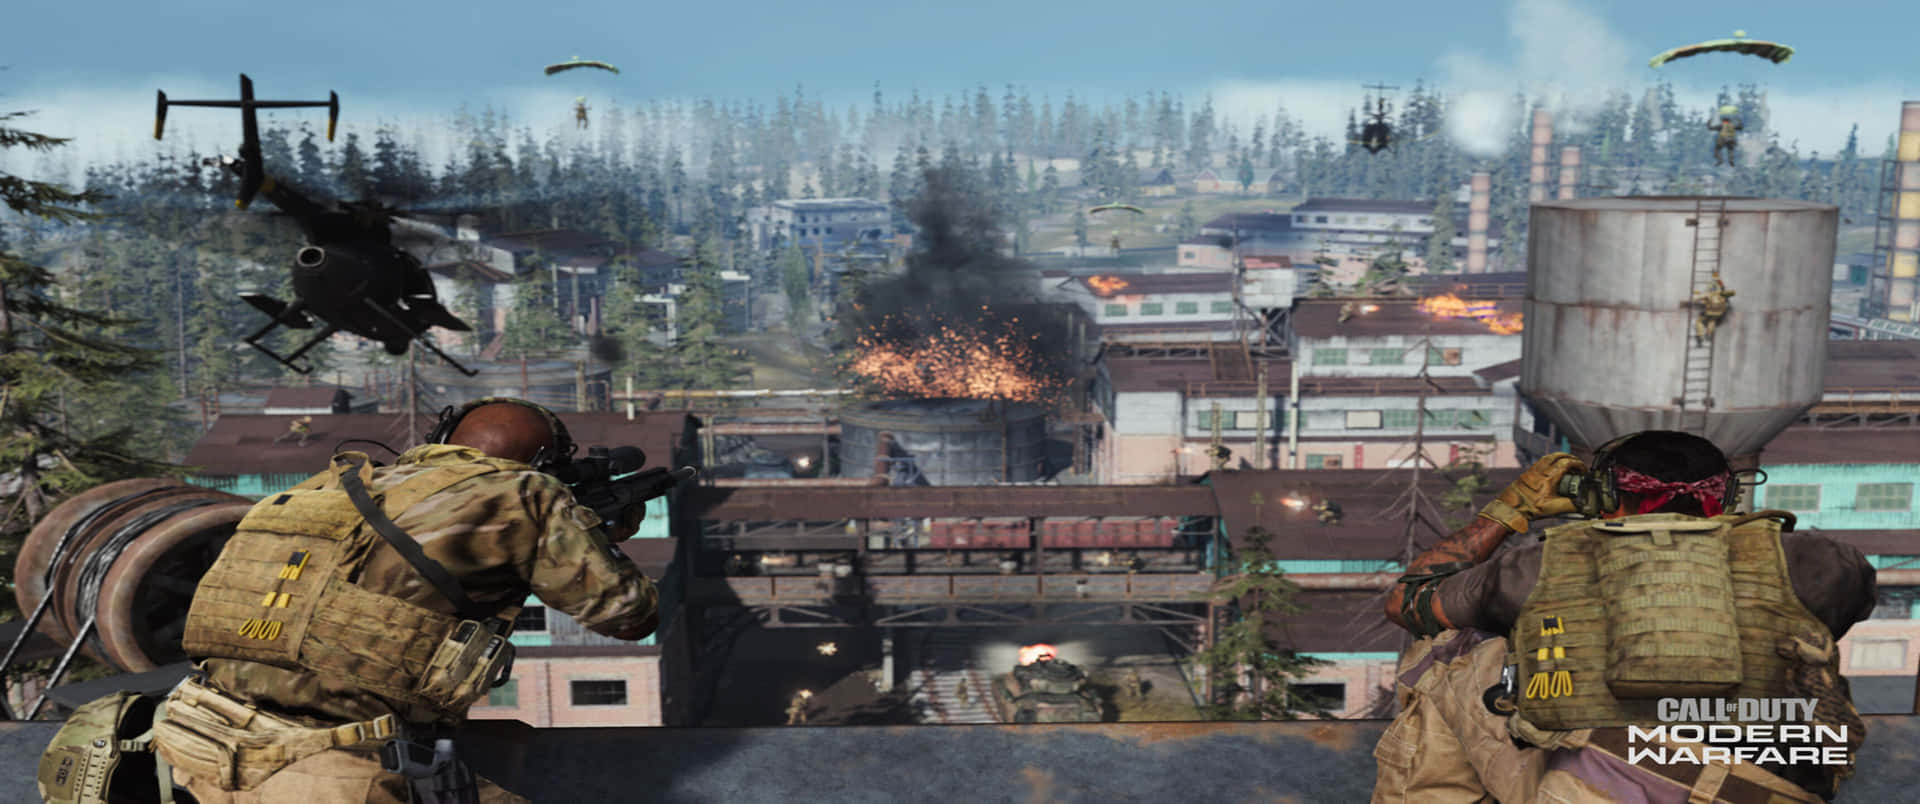 Soldateri Krigszon 3440x1440p Call Of Duty Modern Warfare Bakgrund.